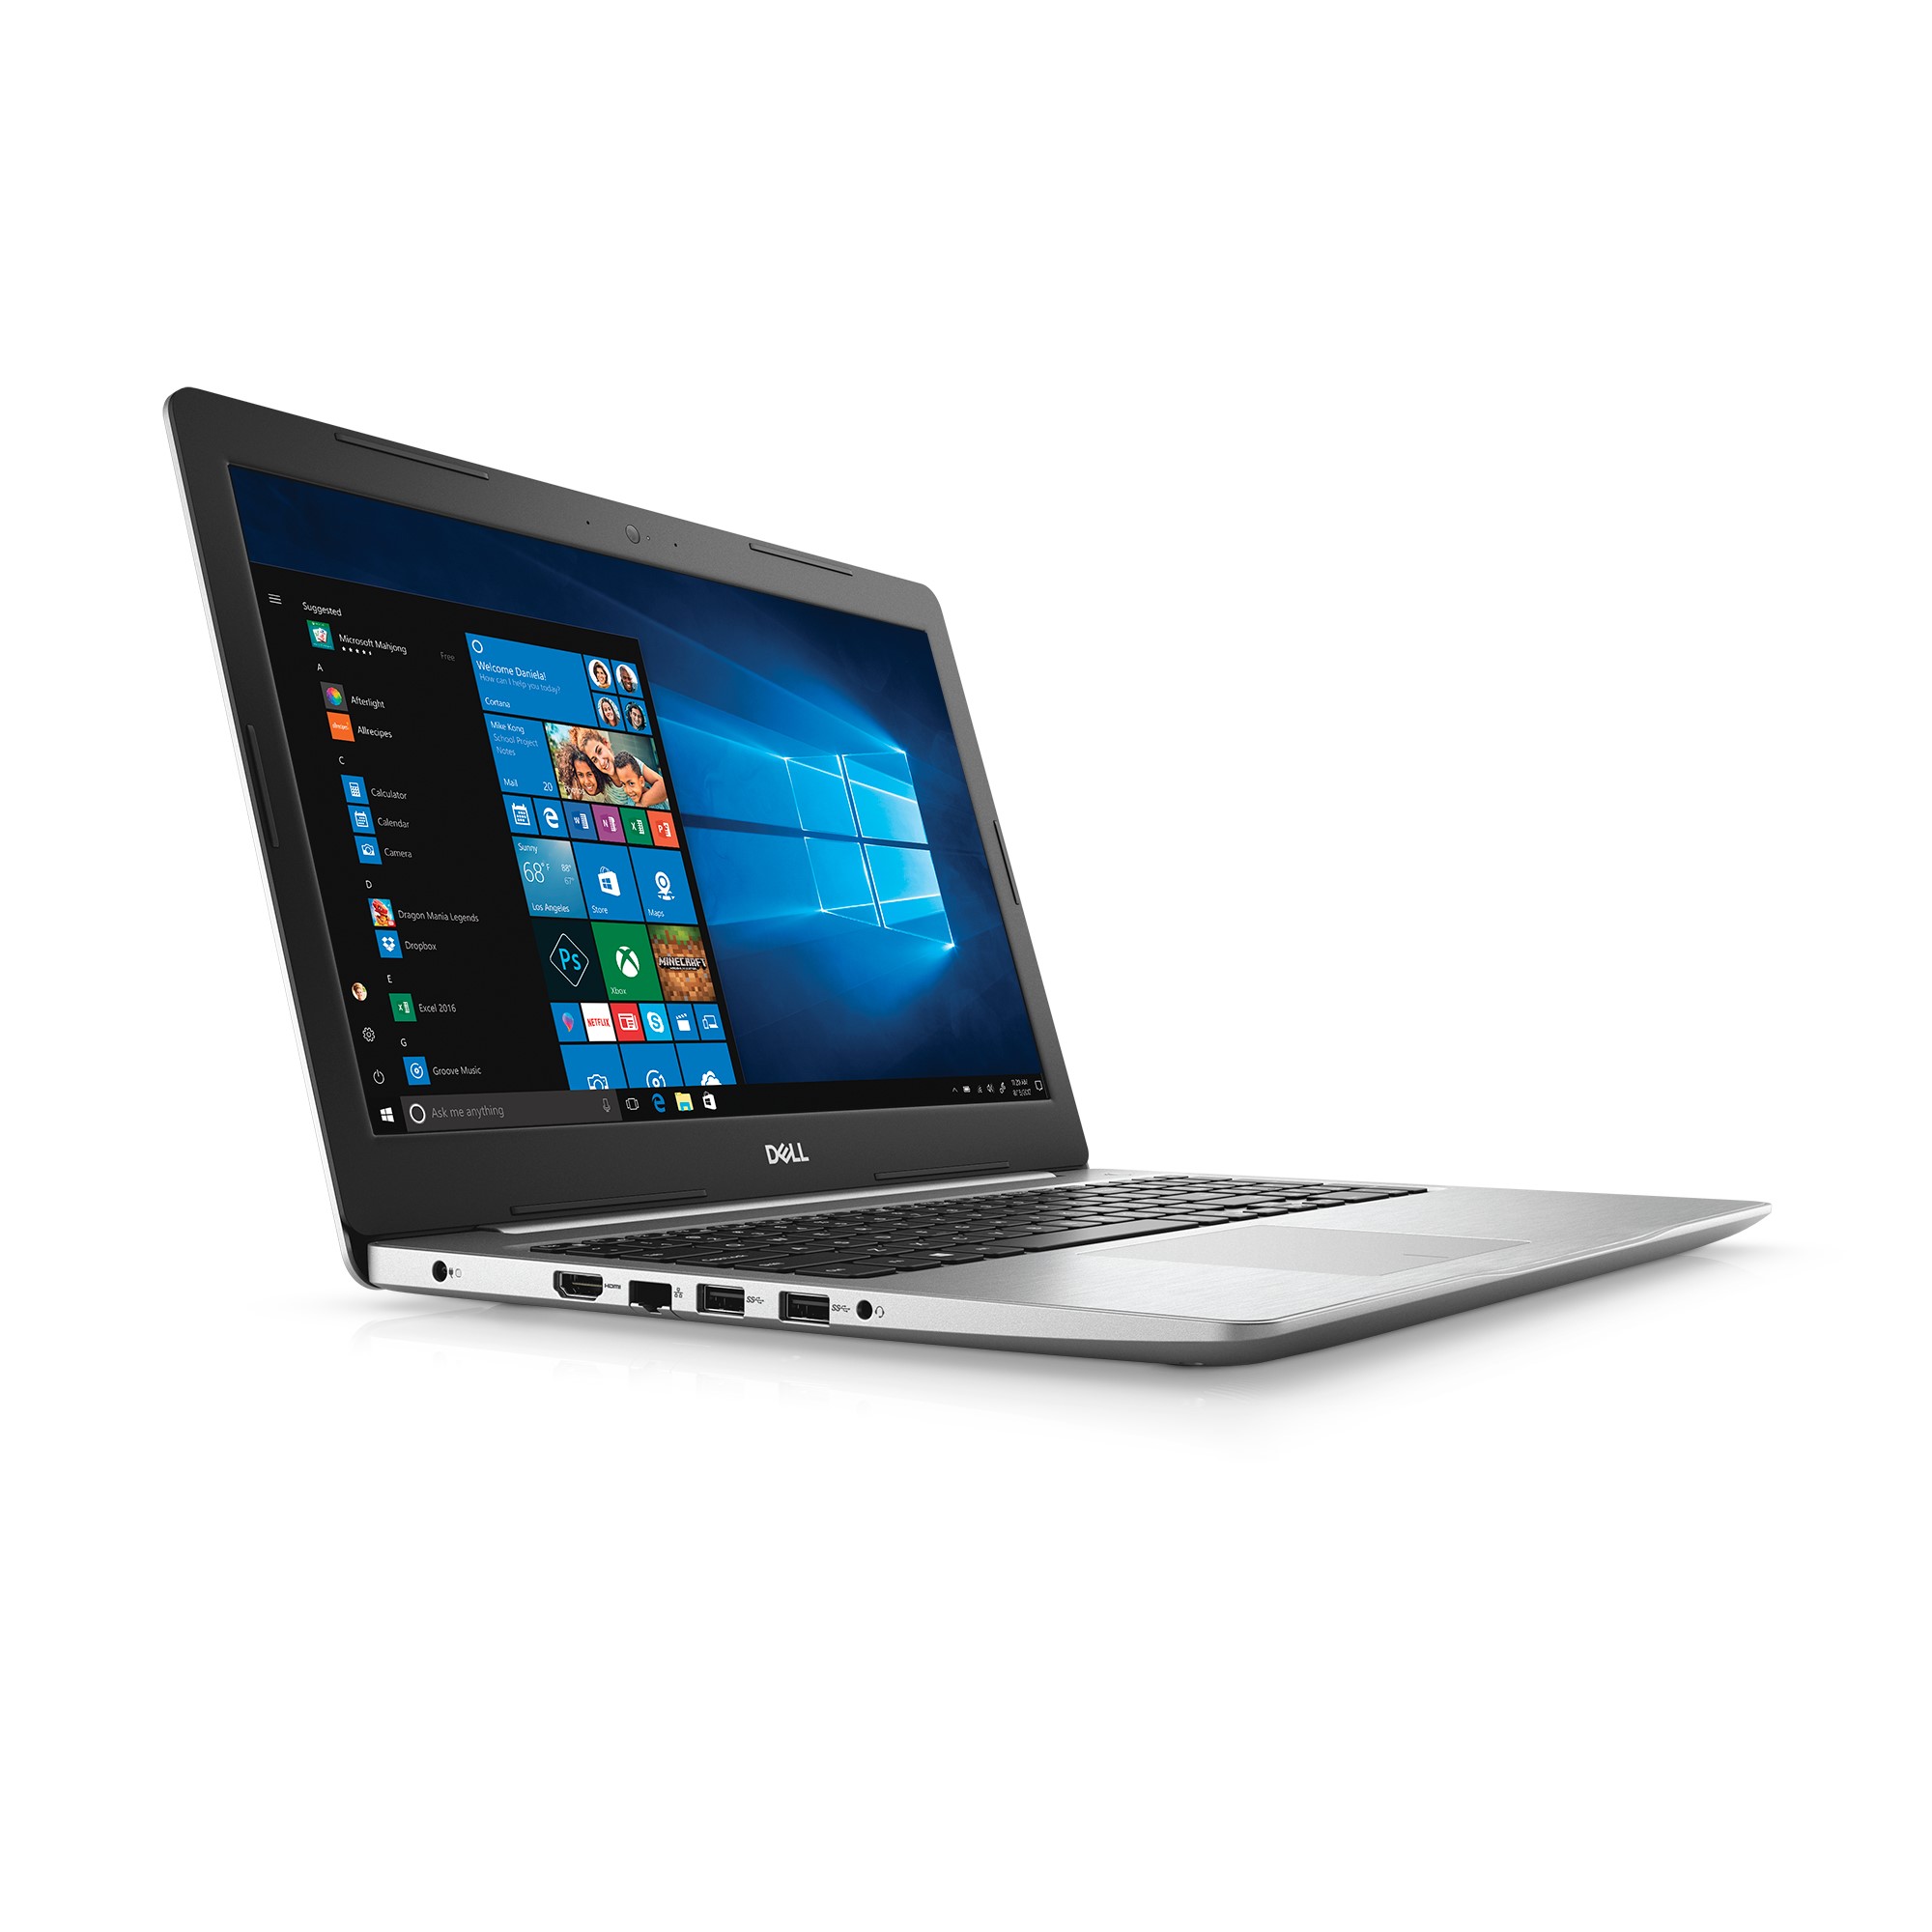 Dell i5575-A347SLV Inspiron Laptop, 15.6'' Touchscreen, AMD Ryzen 5 2500U, 16GB DDR DRAM, 1TB HDD, Windows 10 Home 64bit - image 1 of 8